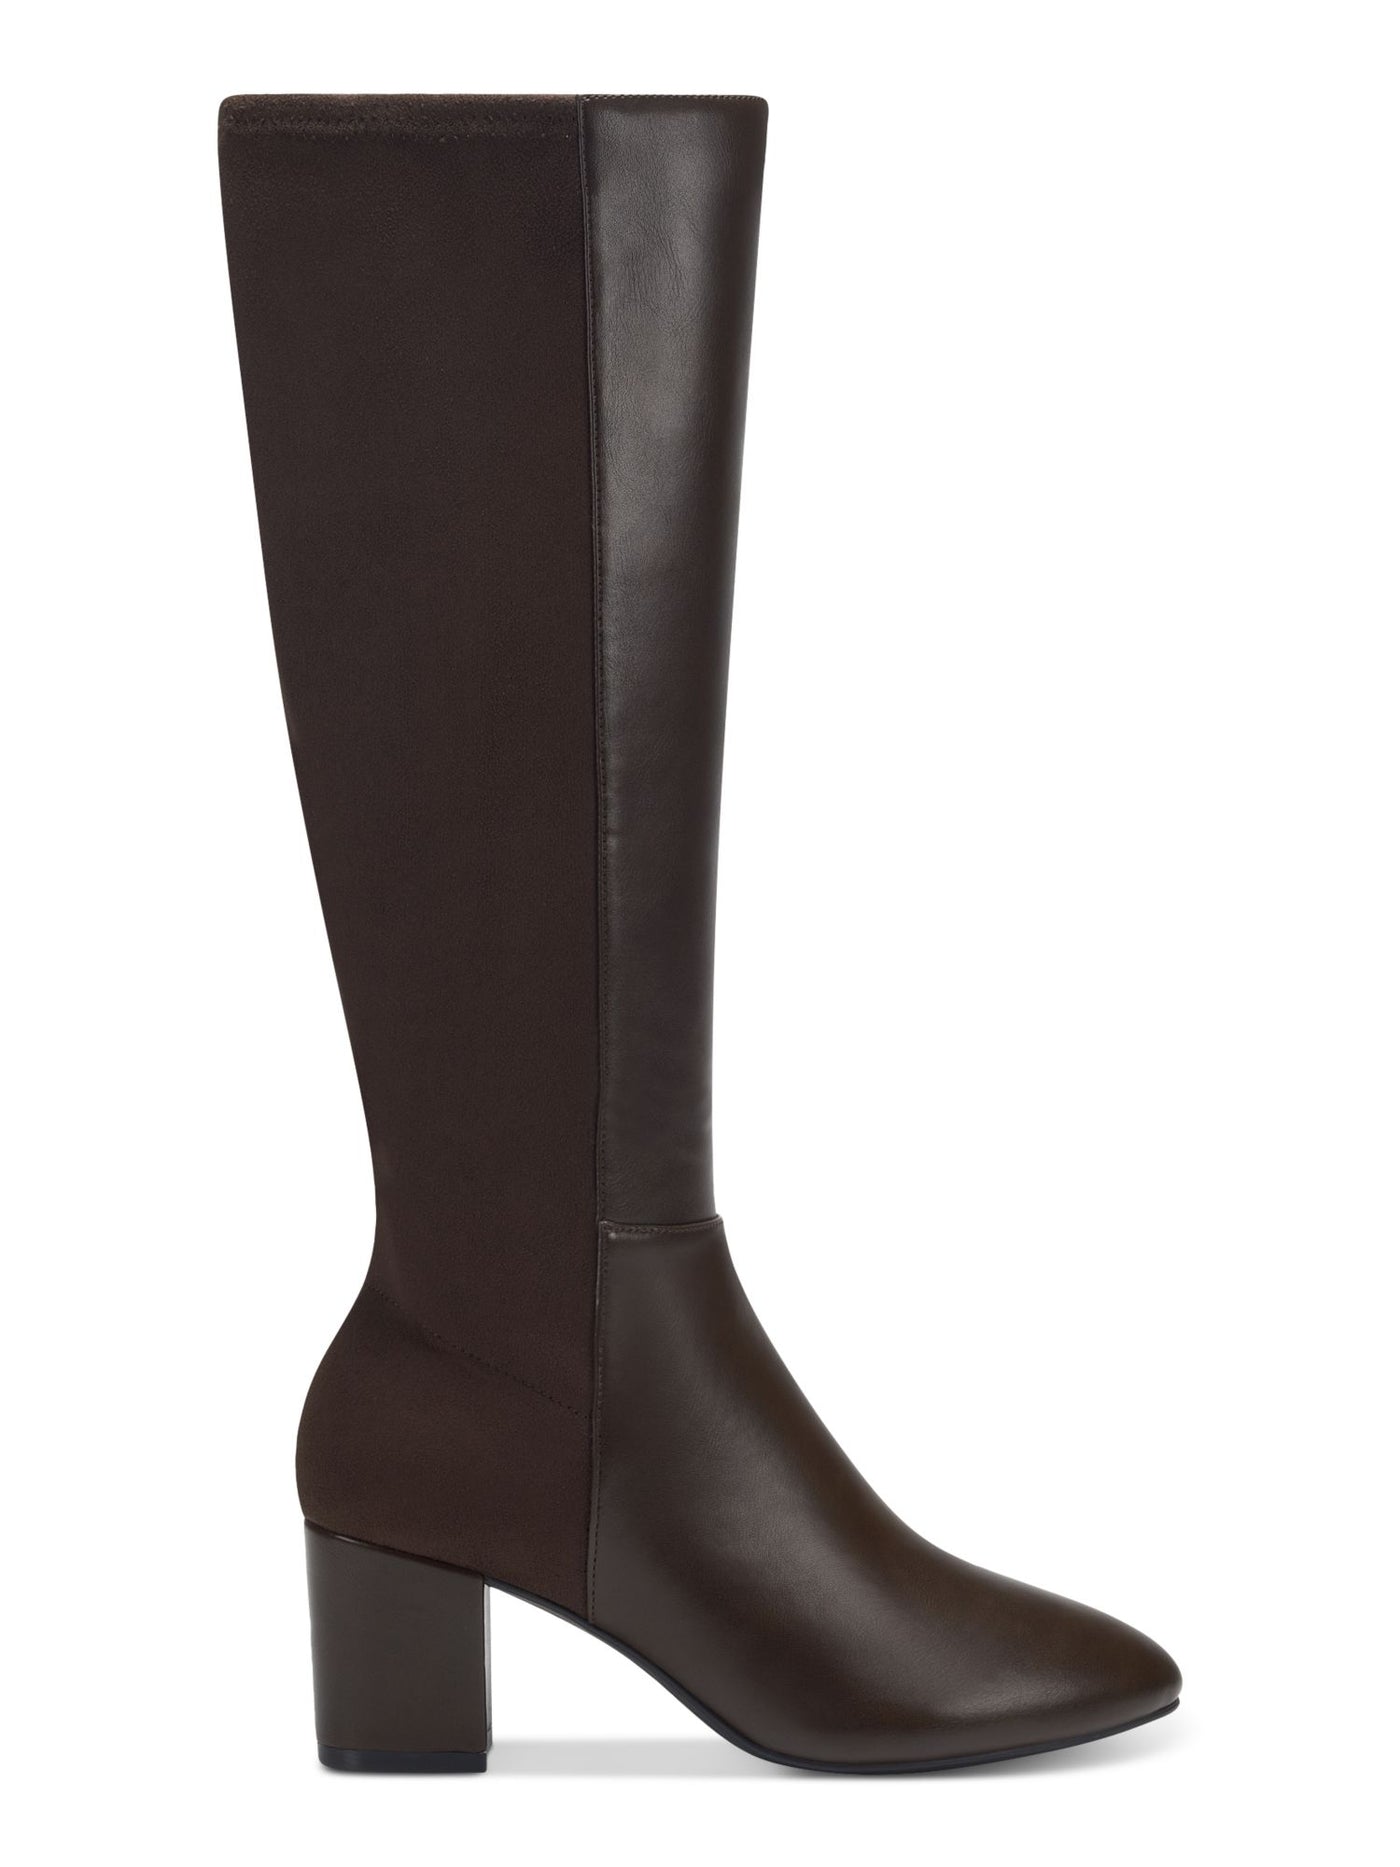 CHARTER CLUB Womens Brown Comfort Sacaria Almond Toe Block Heel Zip-Up Dress Boots 10 M